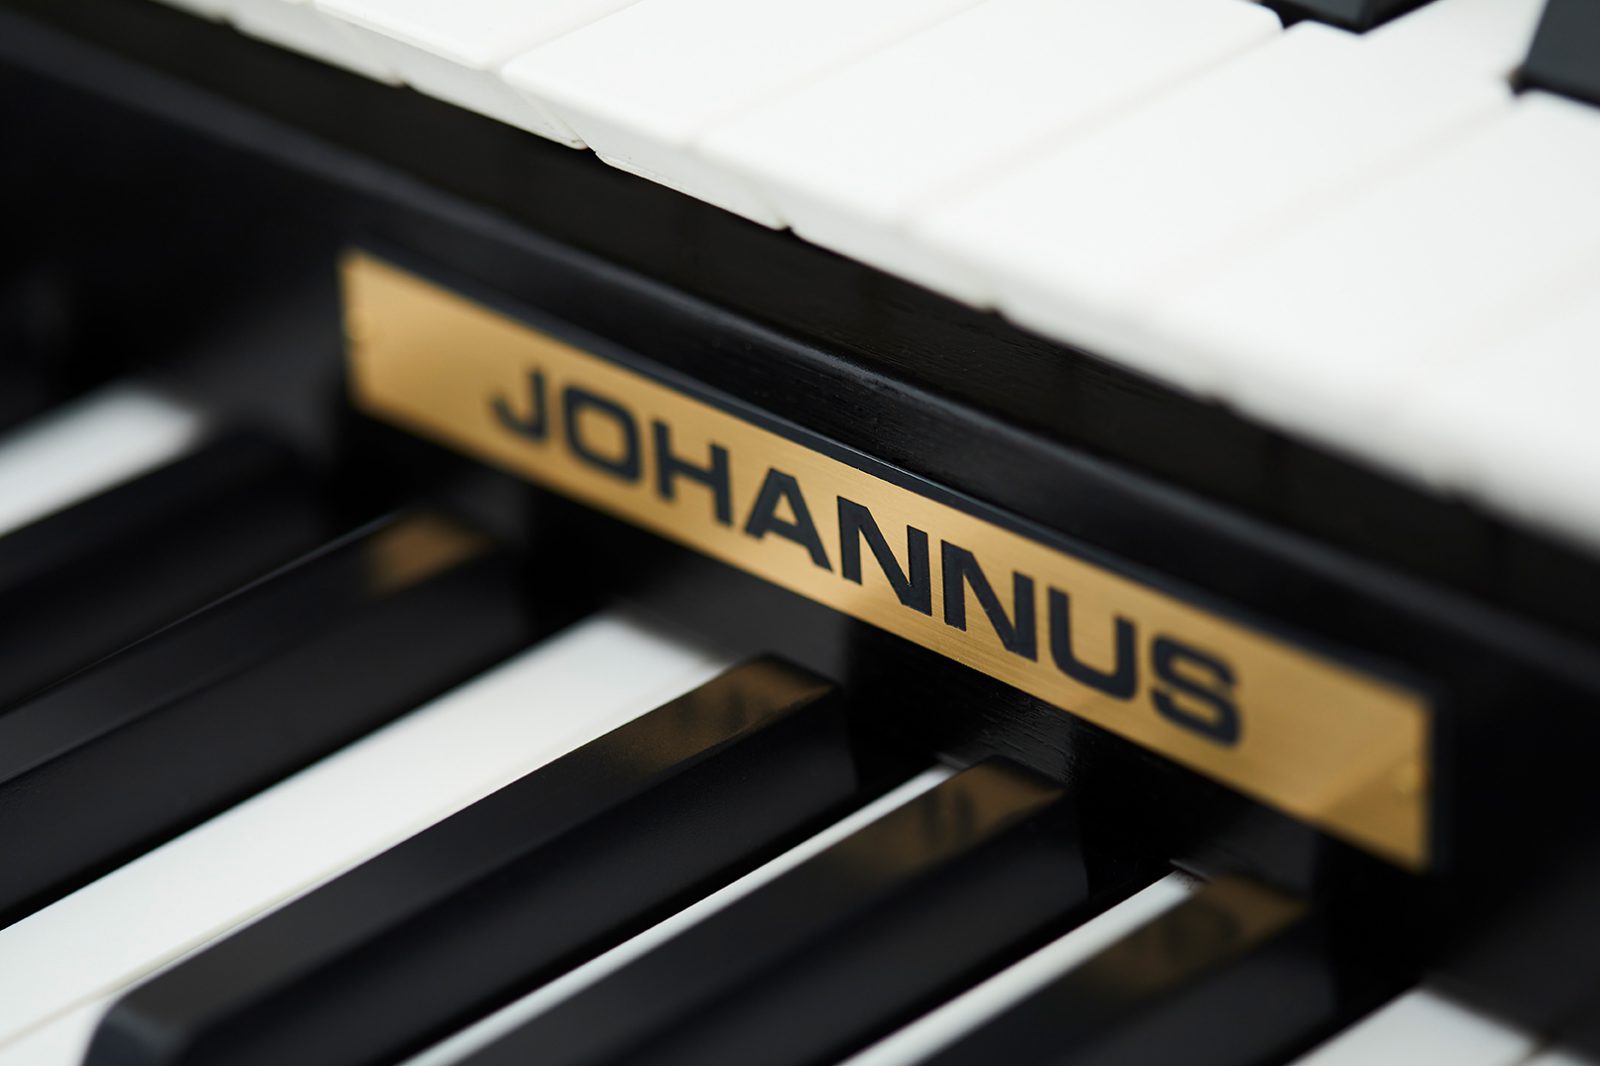 Johannus Studio 350 Andante